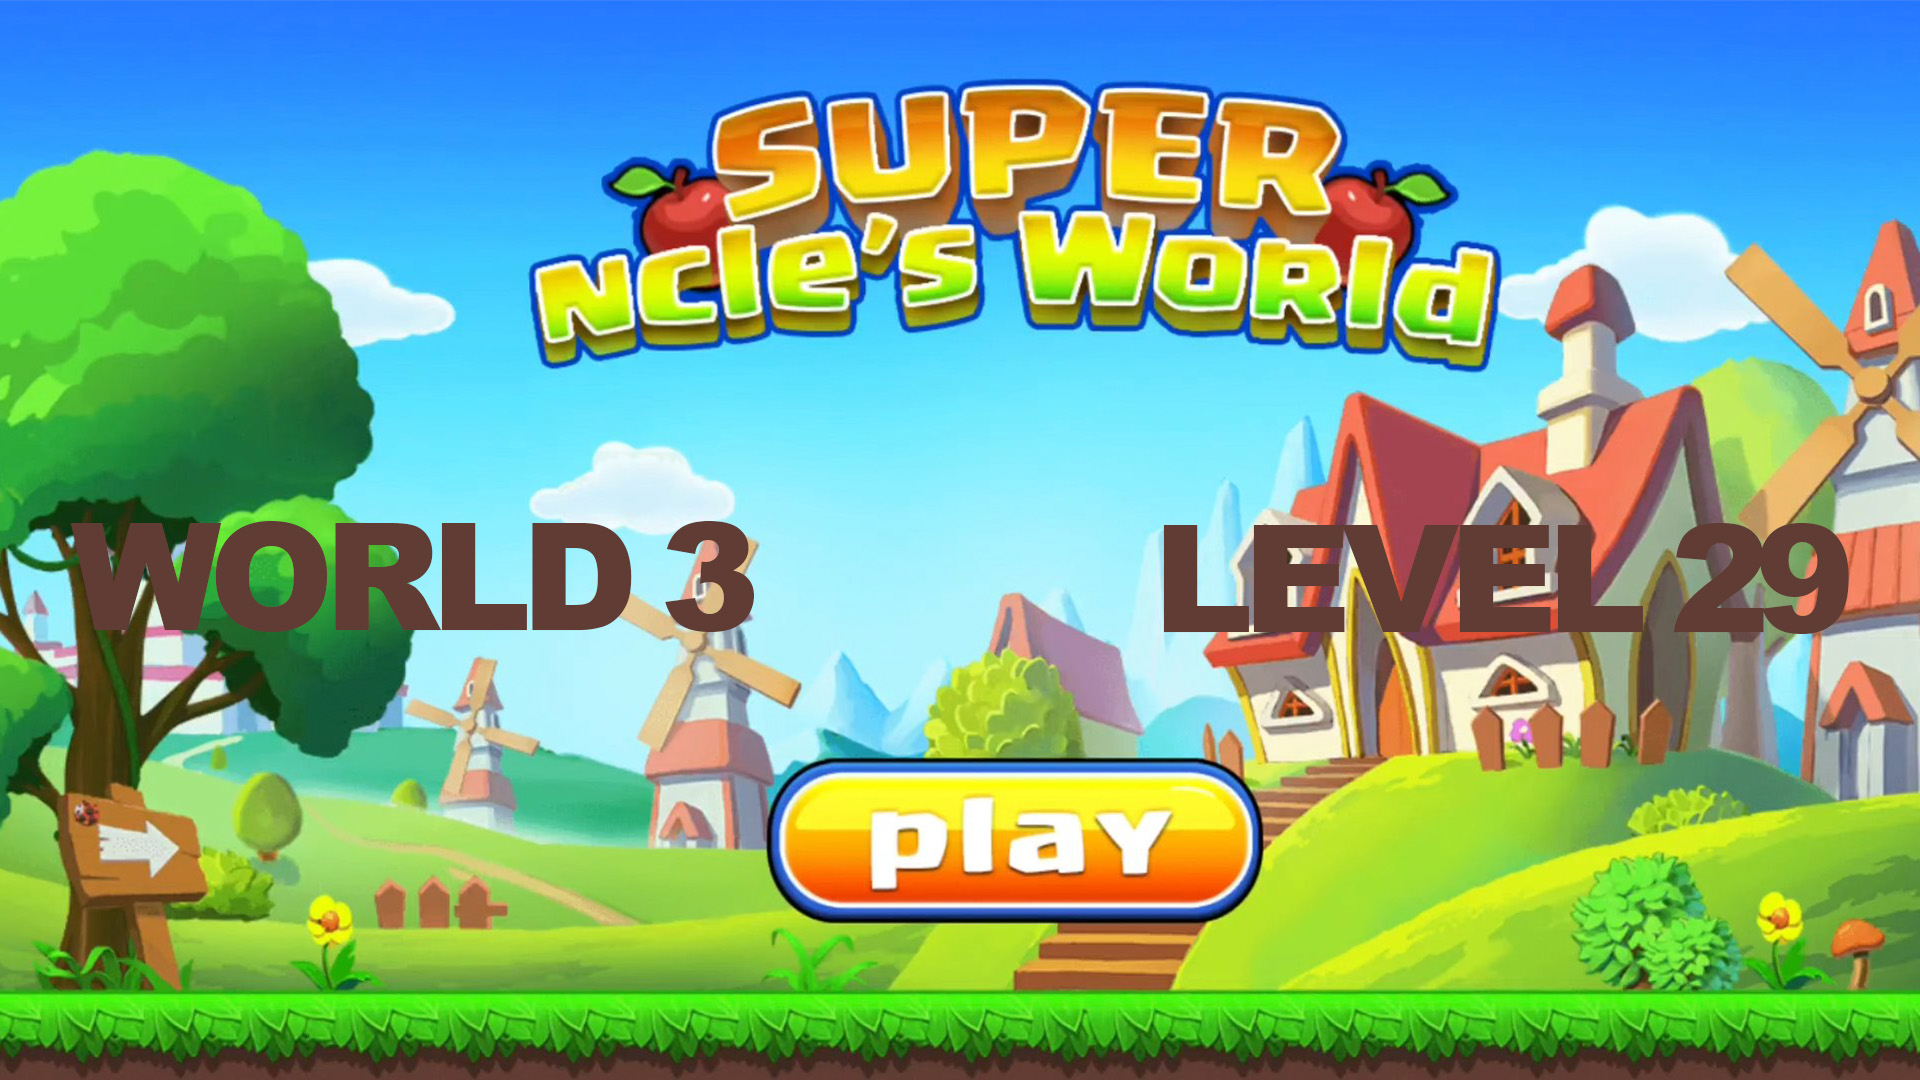 Super ncle's  World 3. Level 29.